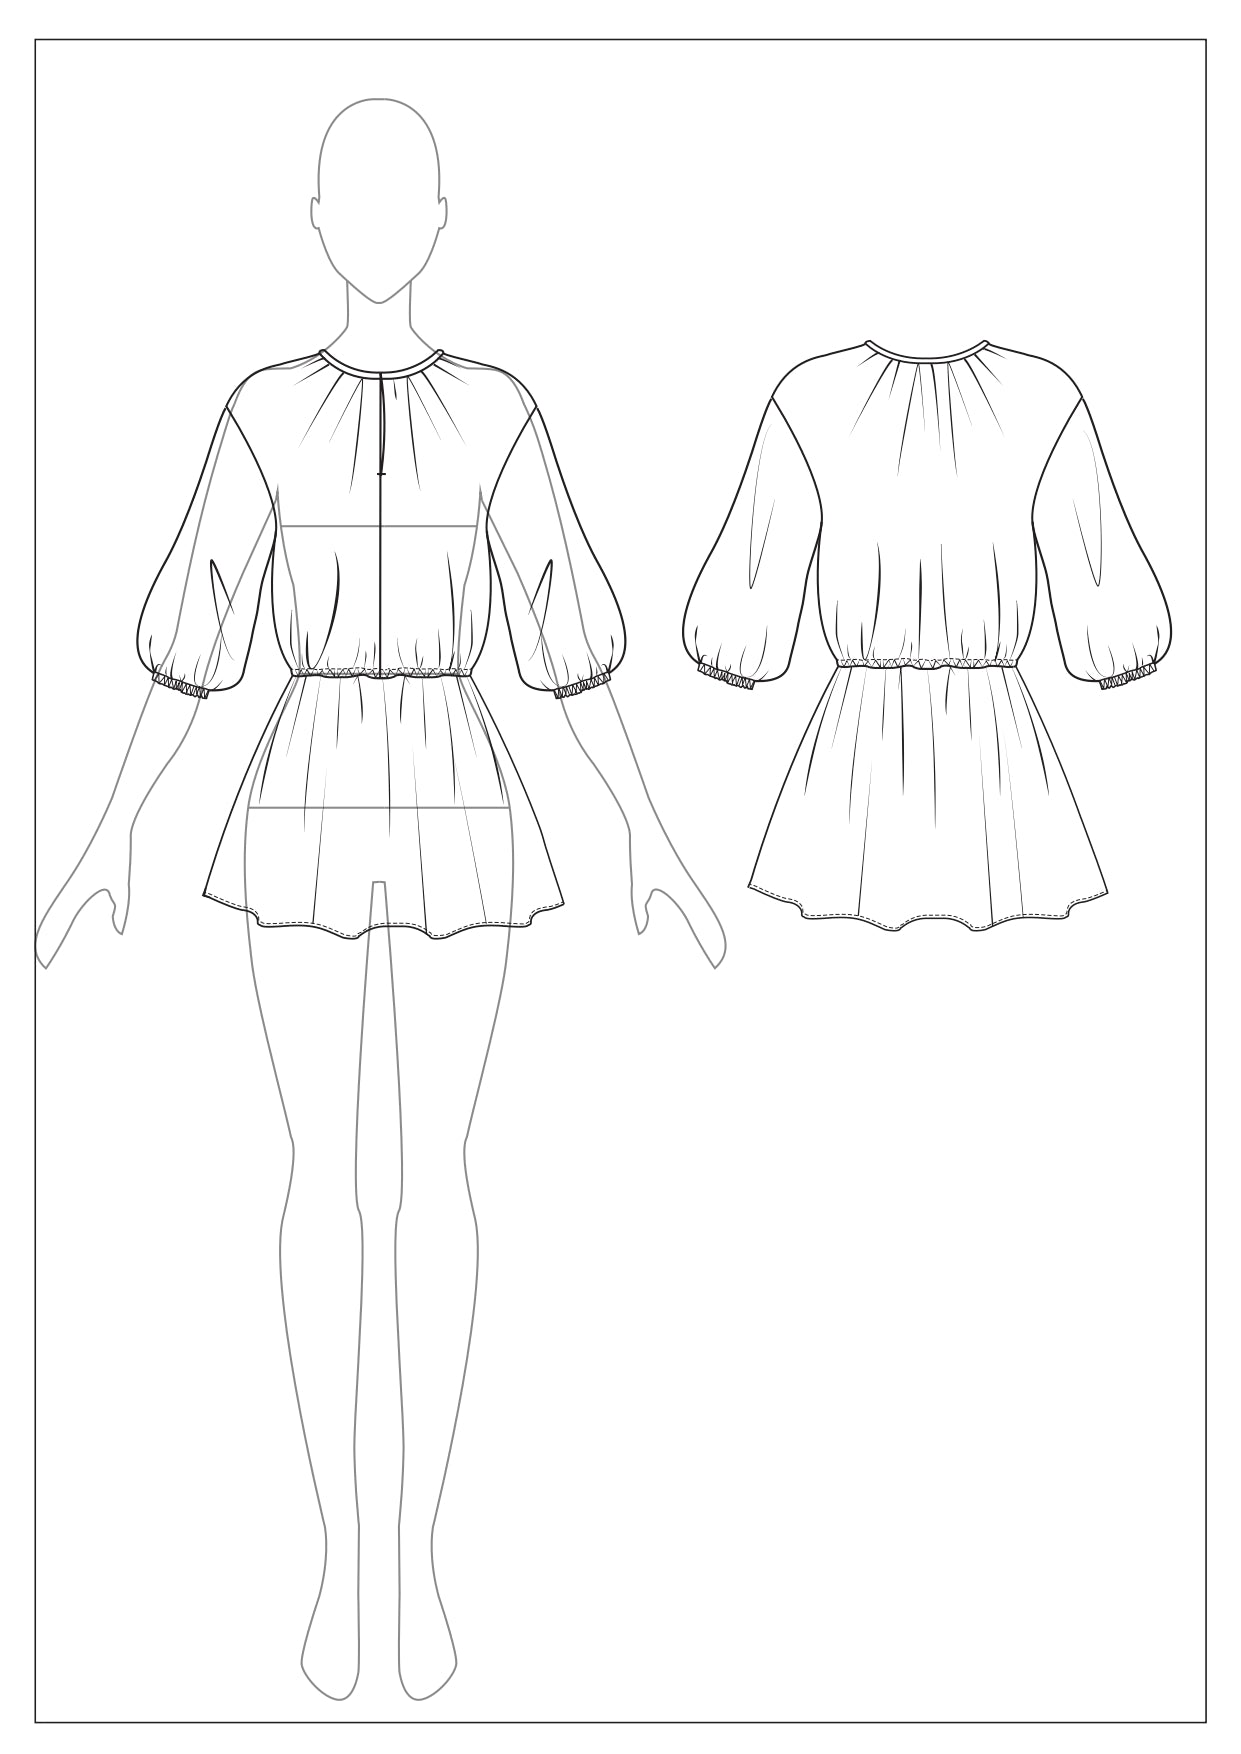 Kate’s Sewing Patterns Athena Dress